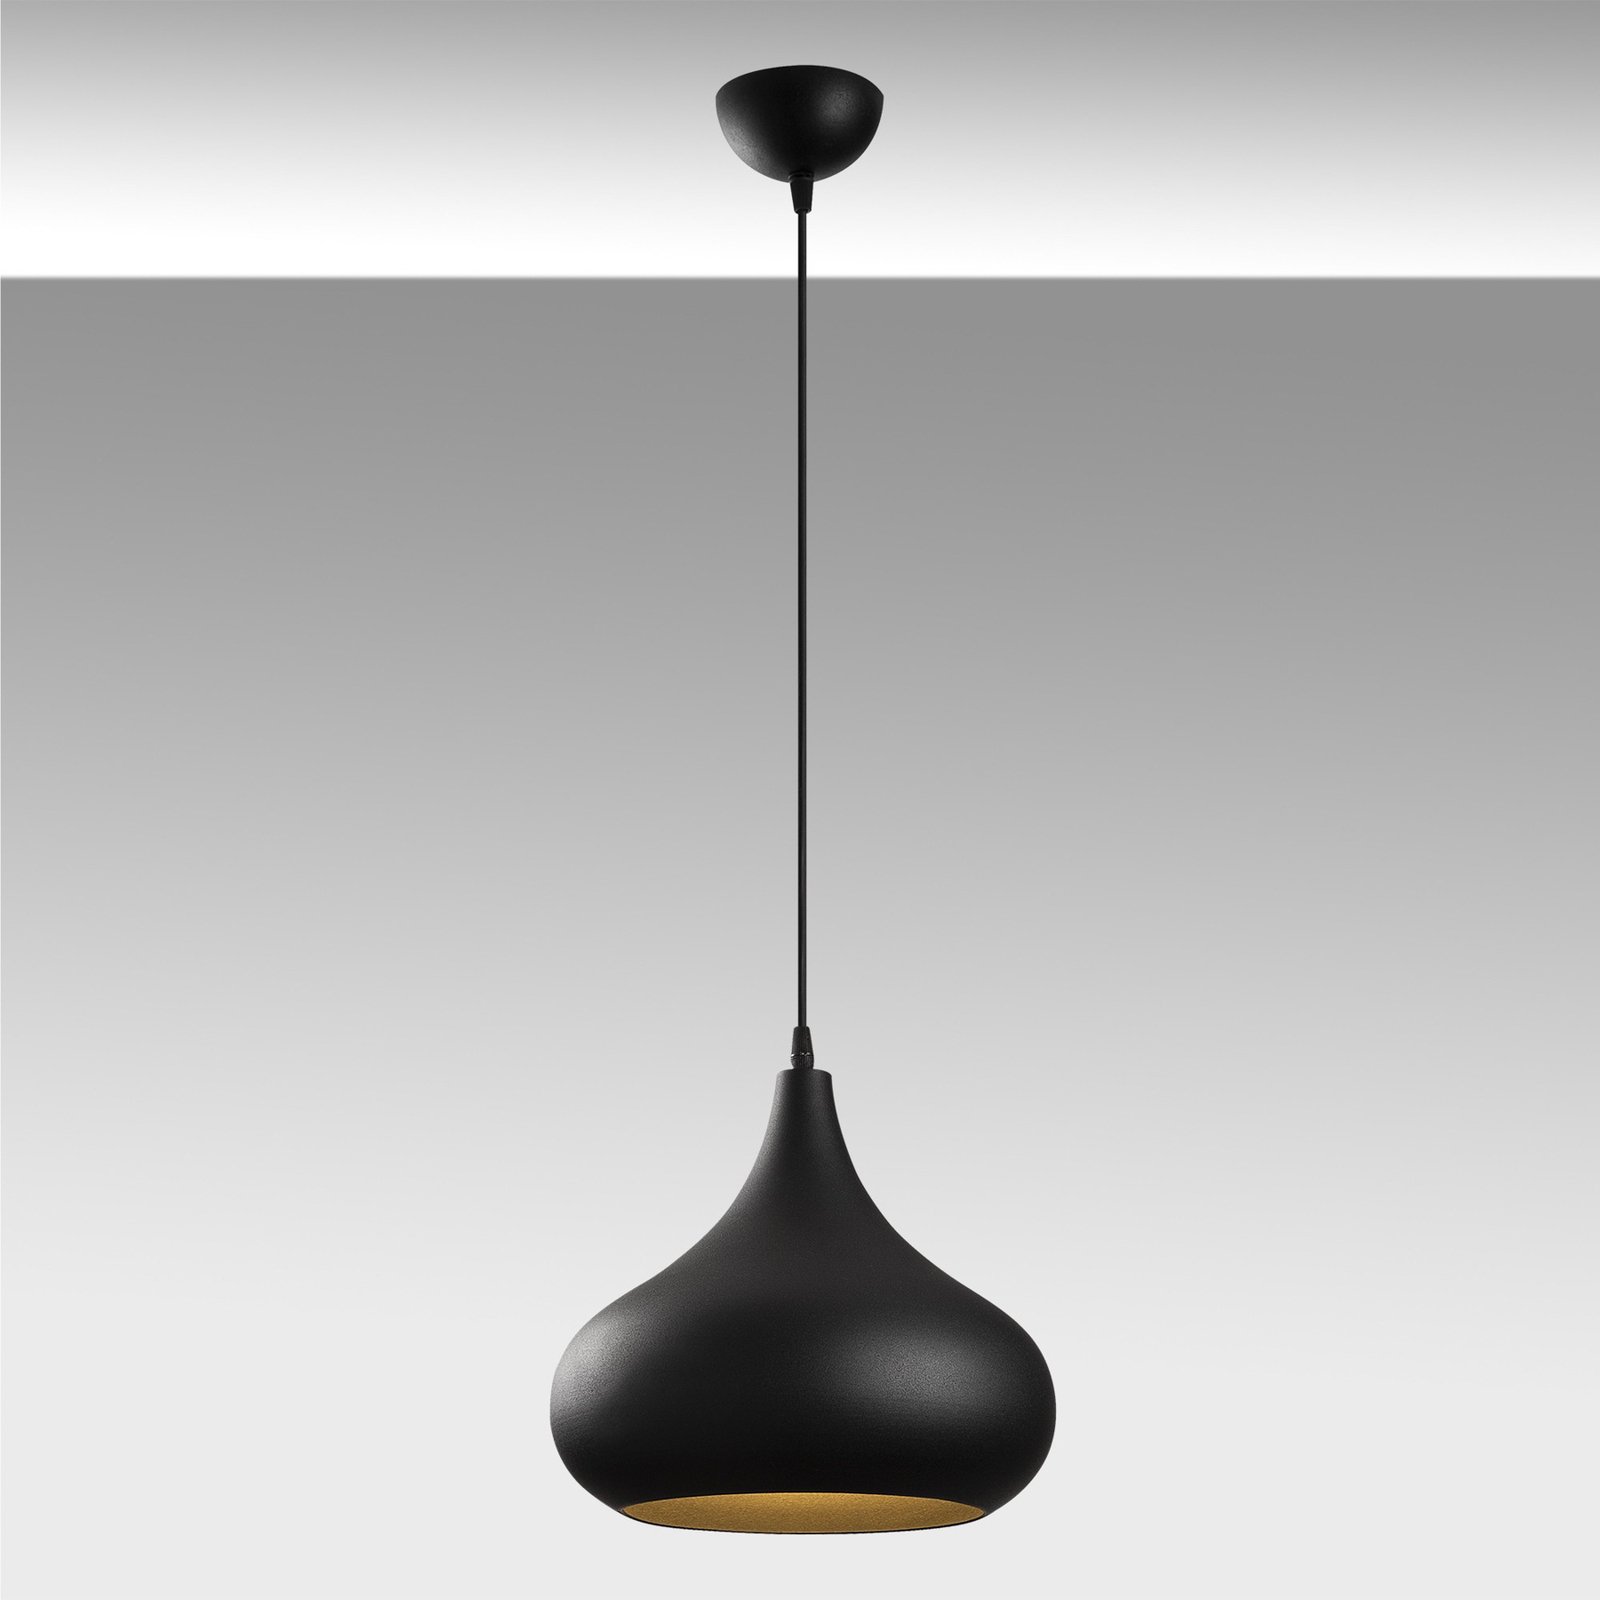 Hanglamp Saglam 3774 1-lamp Ø30cm zwart/goud